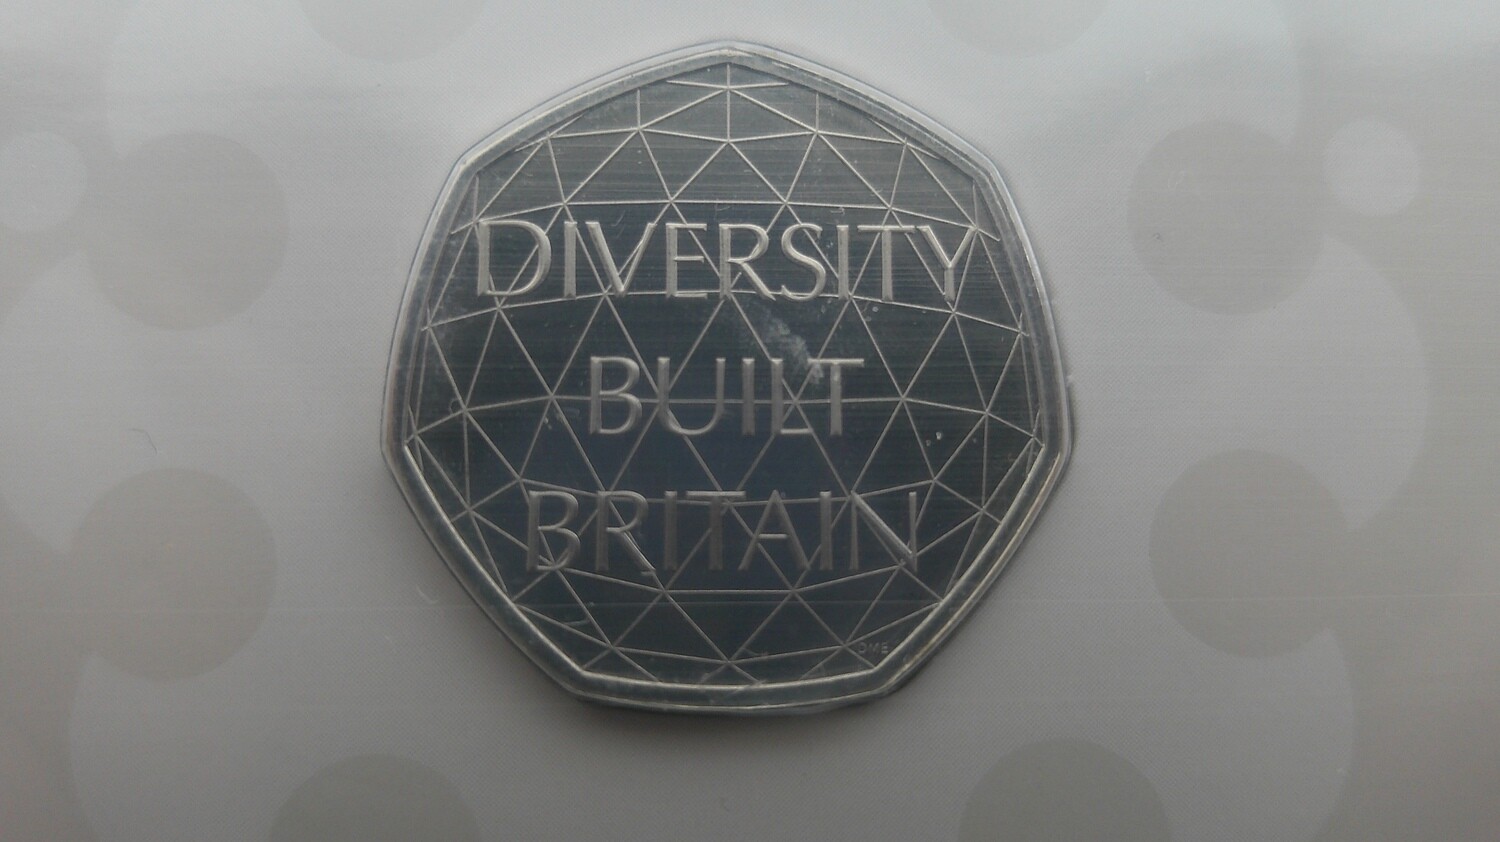 2020 - Fifty Pence (Diversity Built Britain)